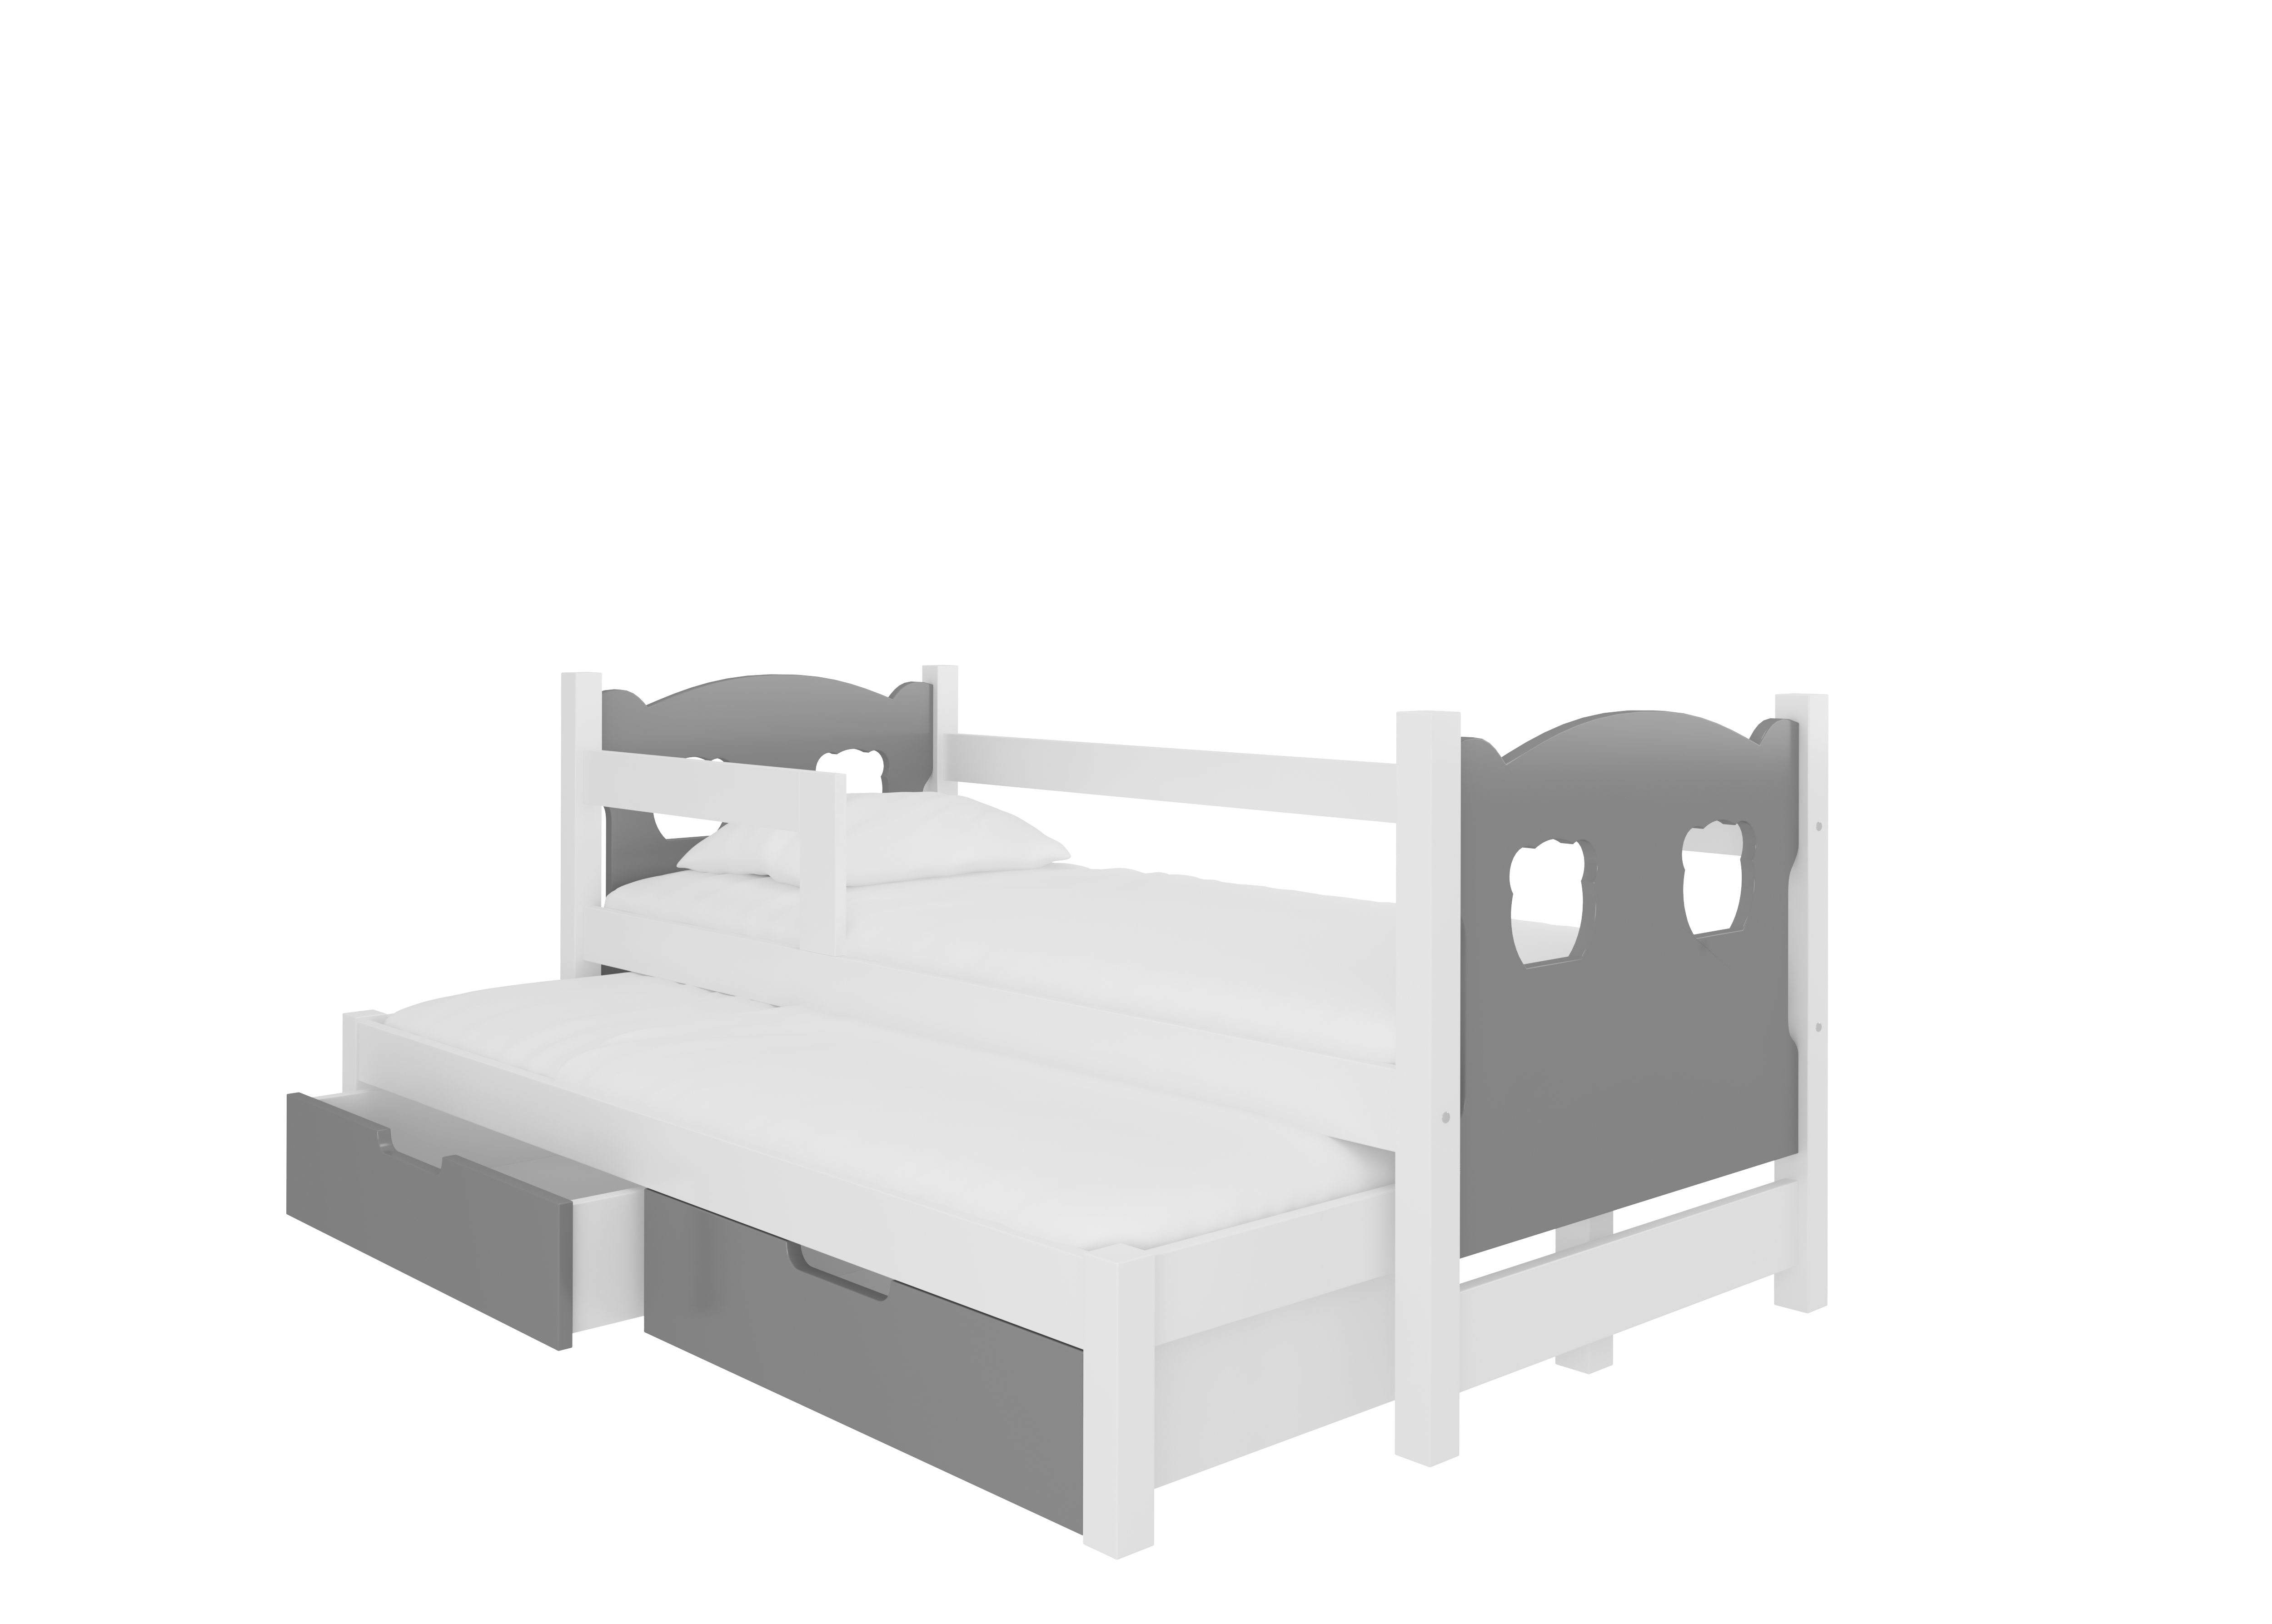 Dětská postel Campos s přistýlkou Rám: Bílá, Čela a šuplíky: Šedá - Bílá,Šedá